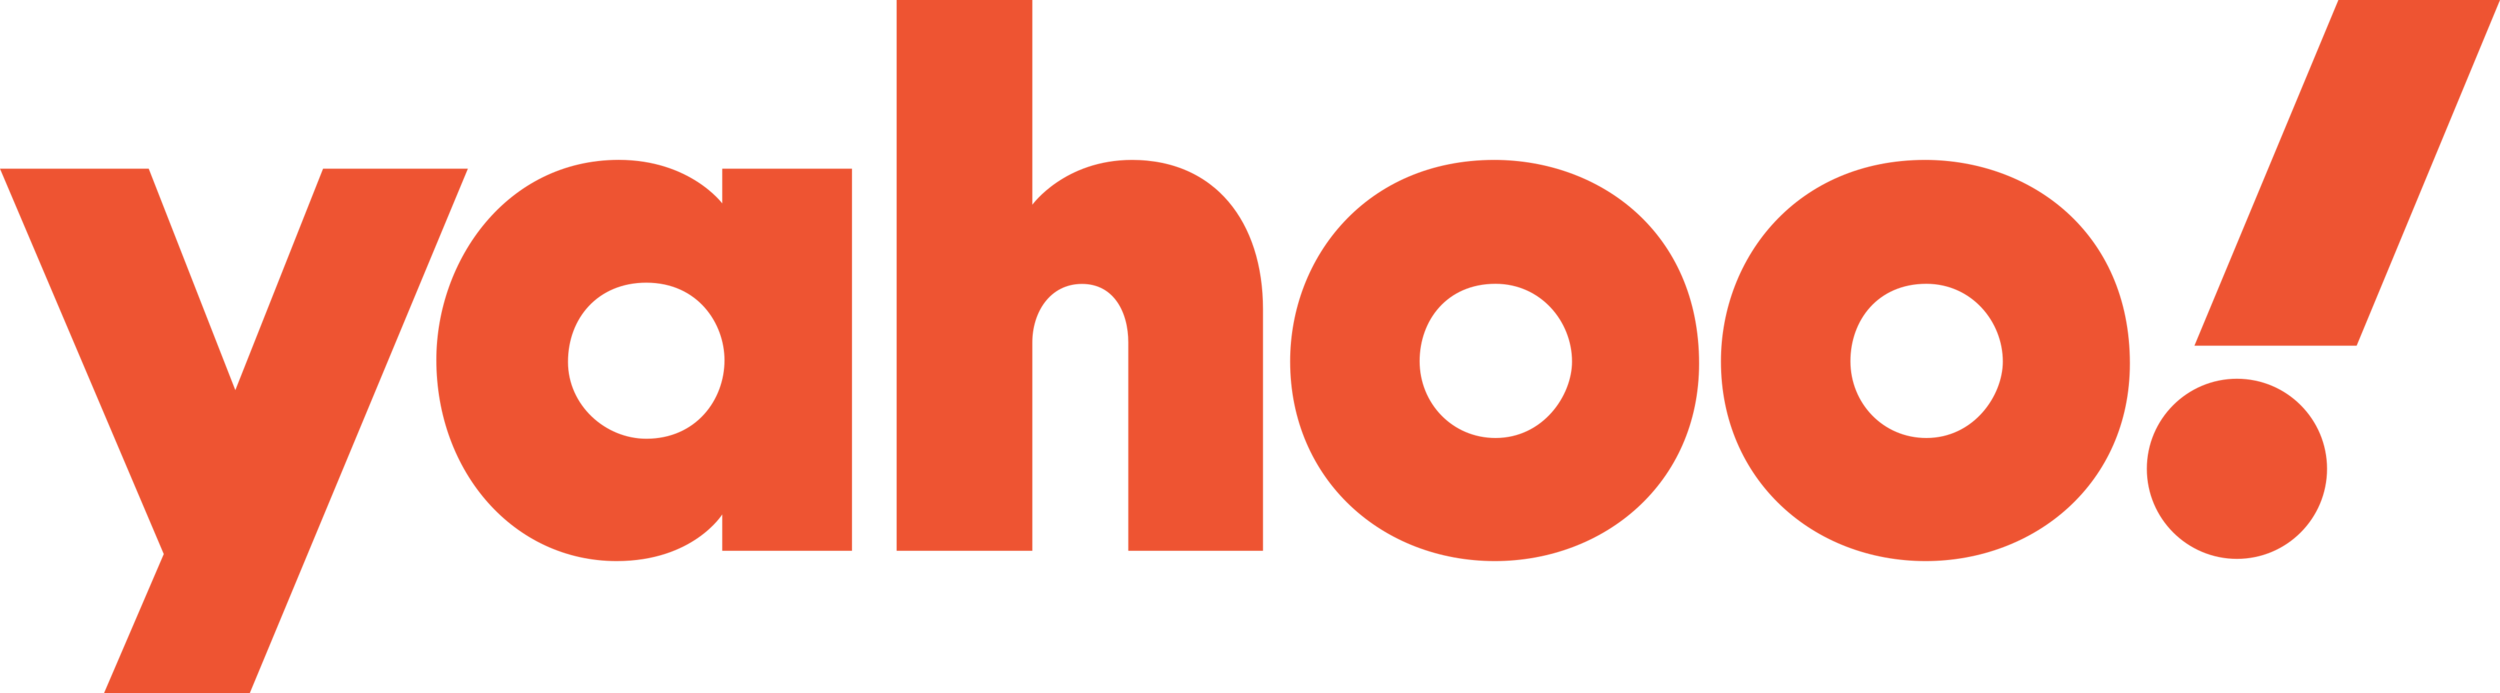 Yahoo-logo-on